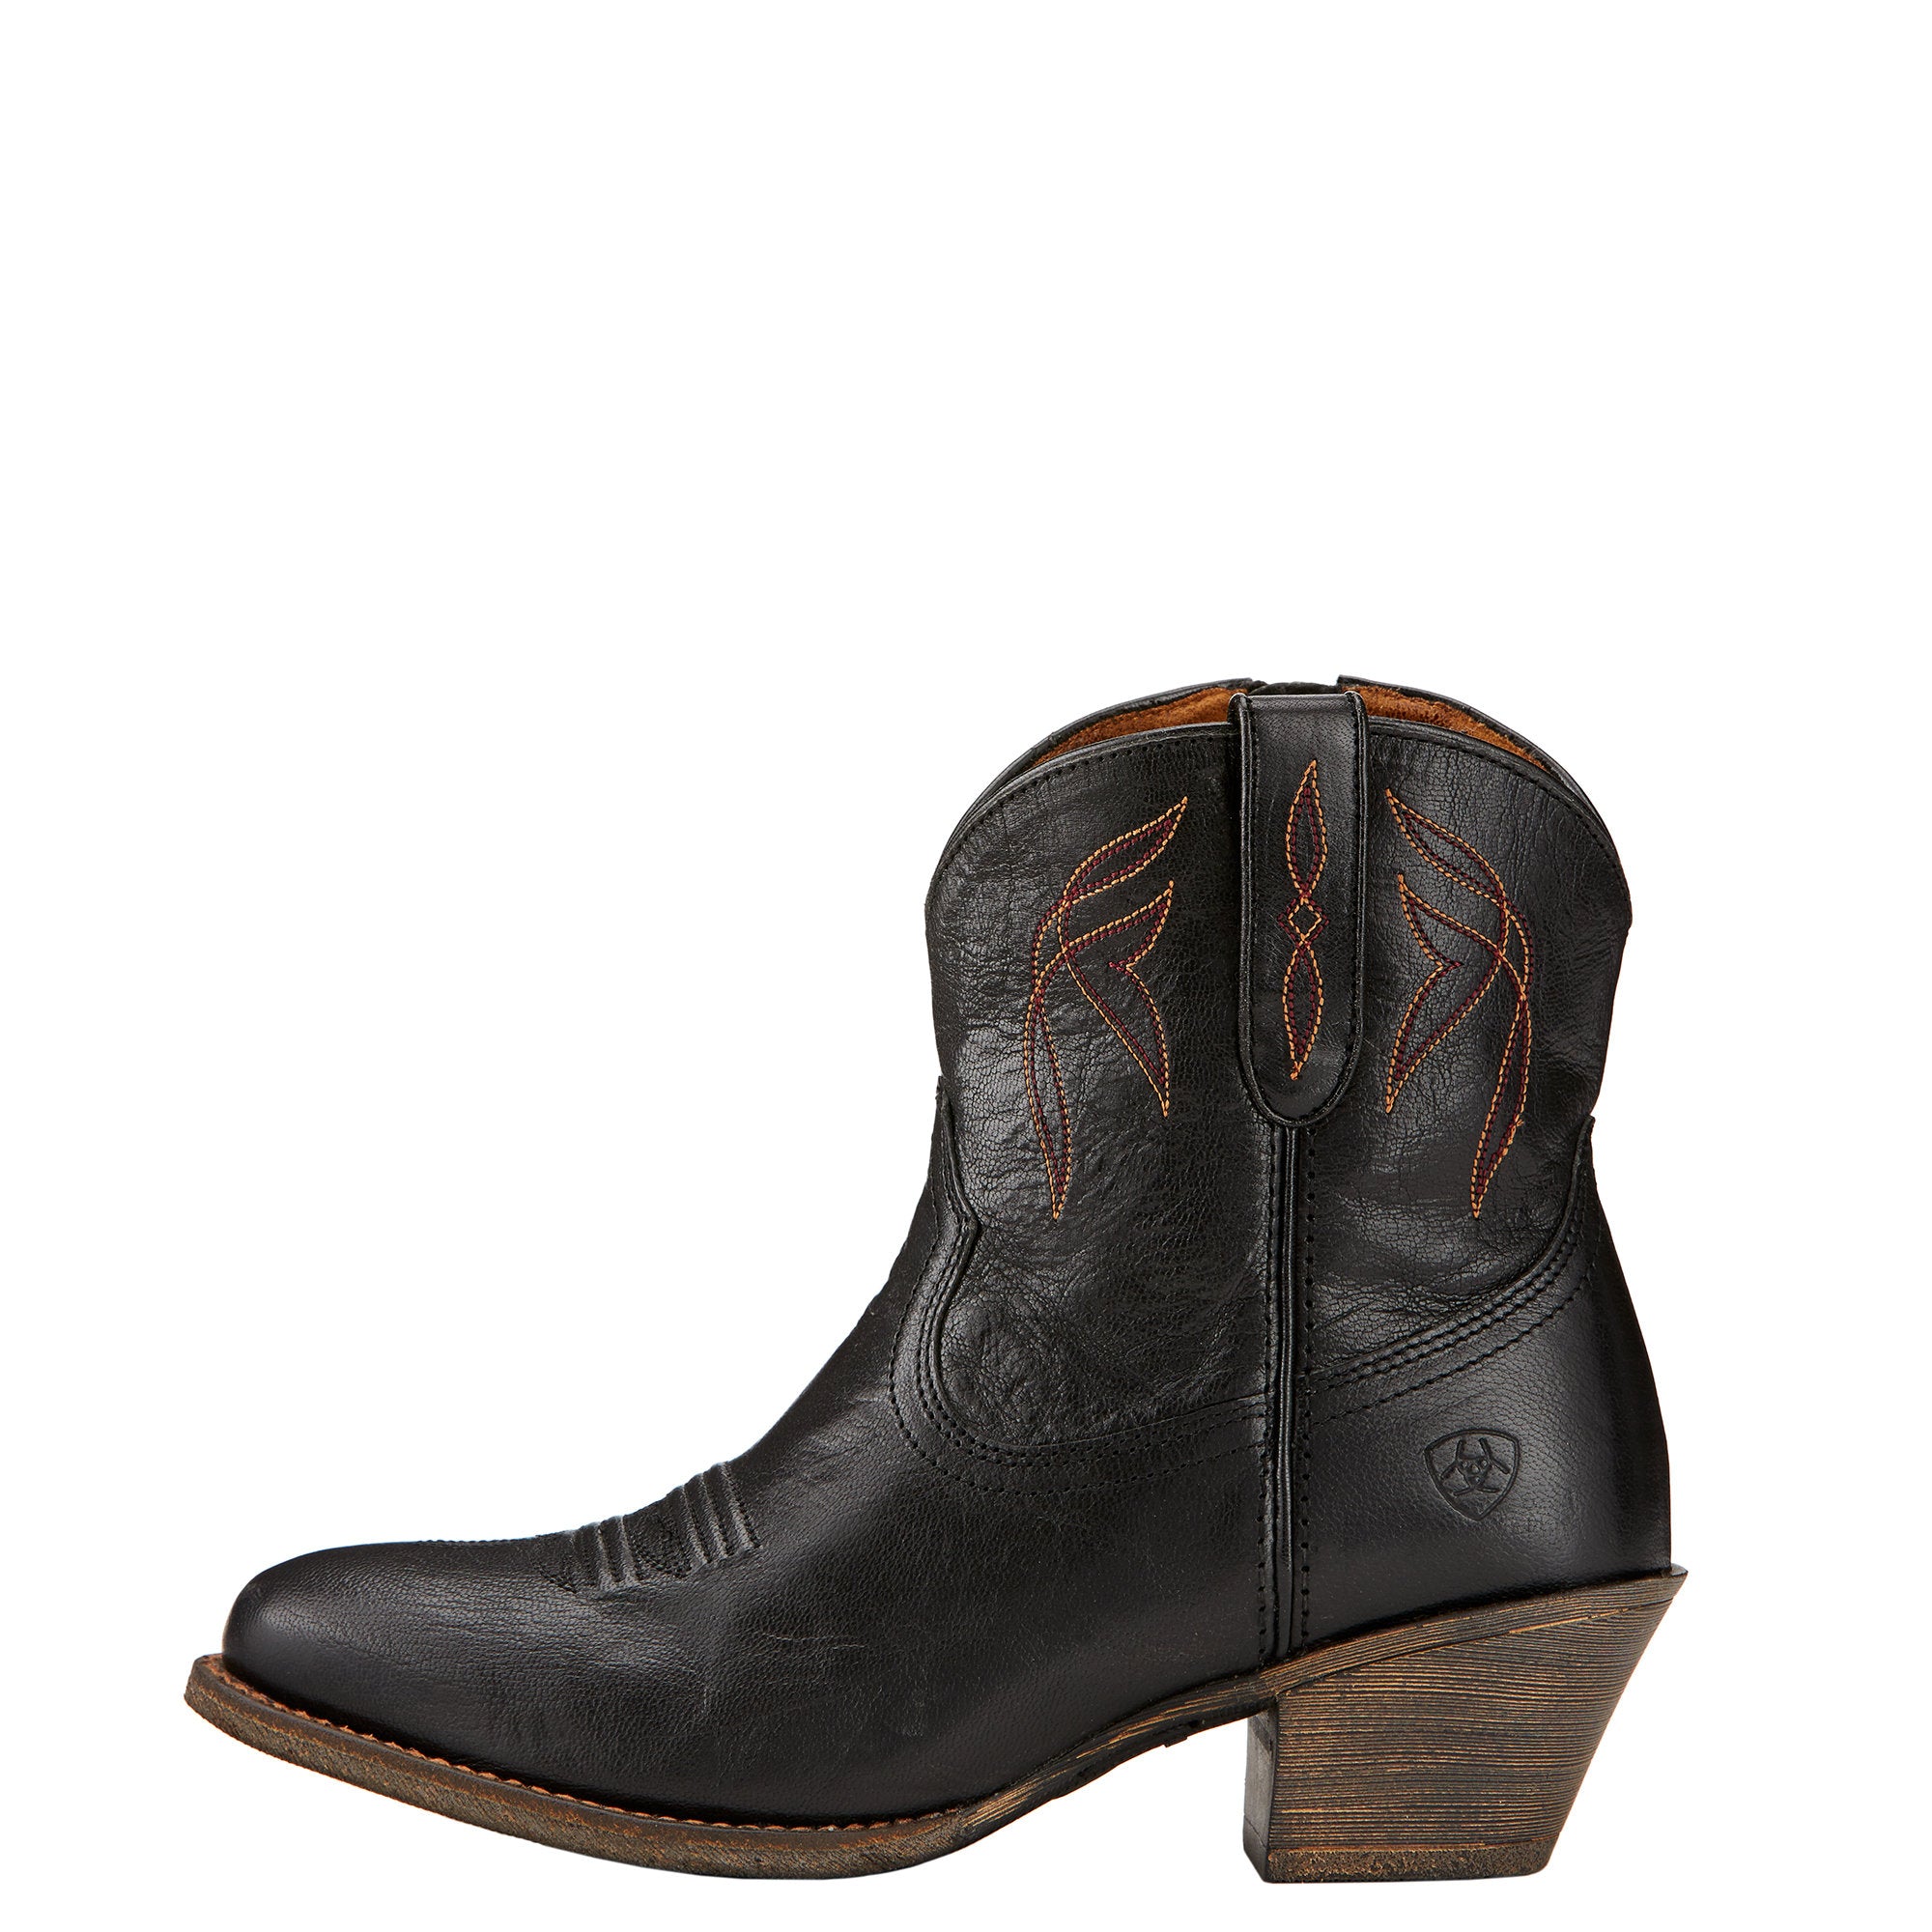 ARIAT Darlin Western Boots - Womens - Old Black